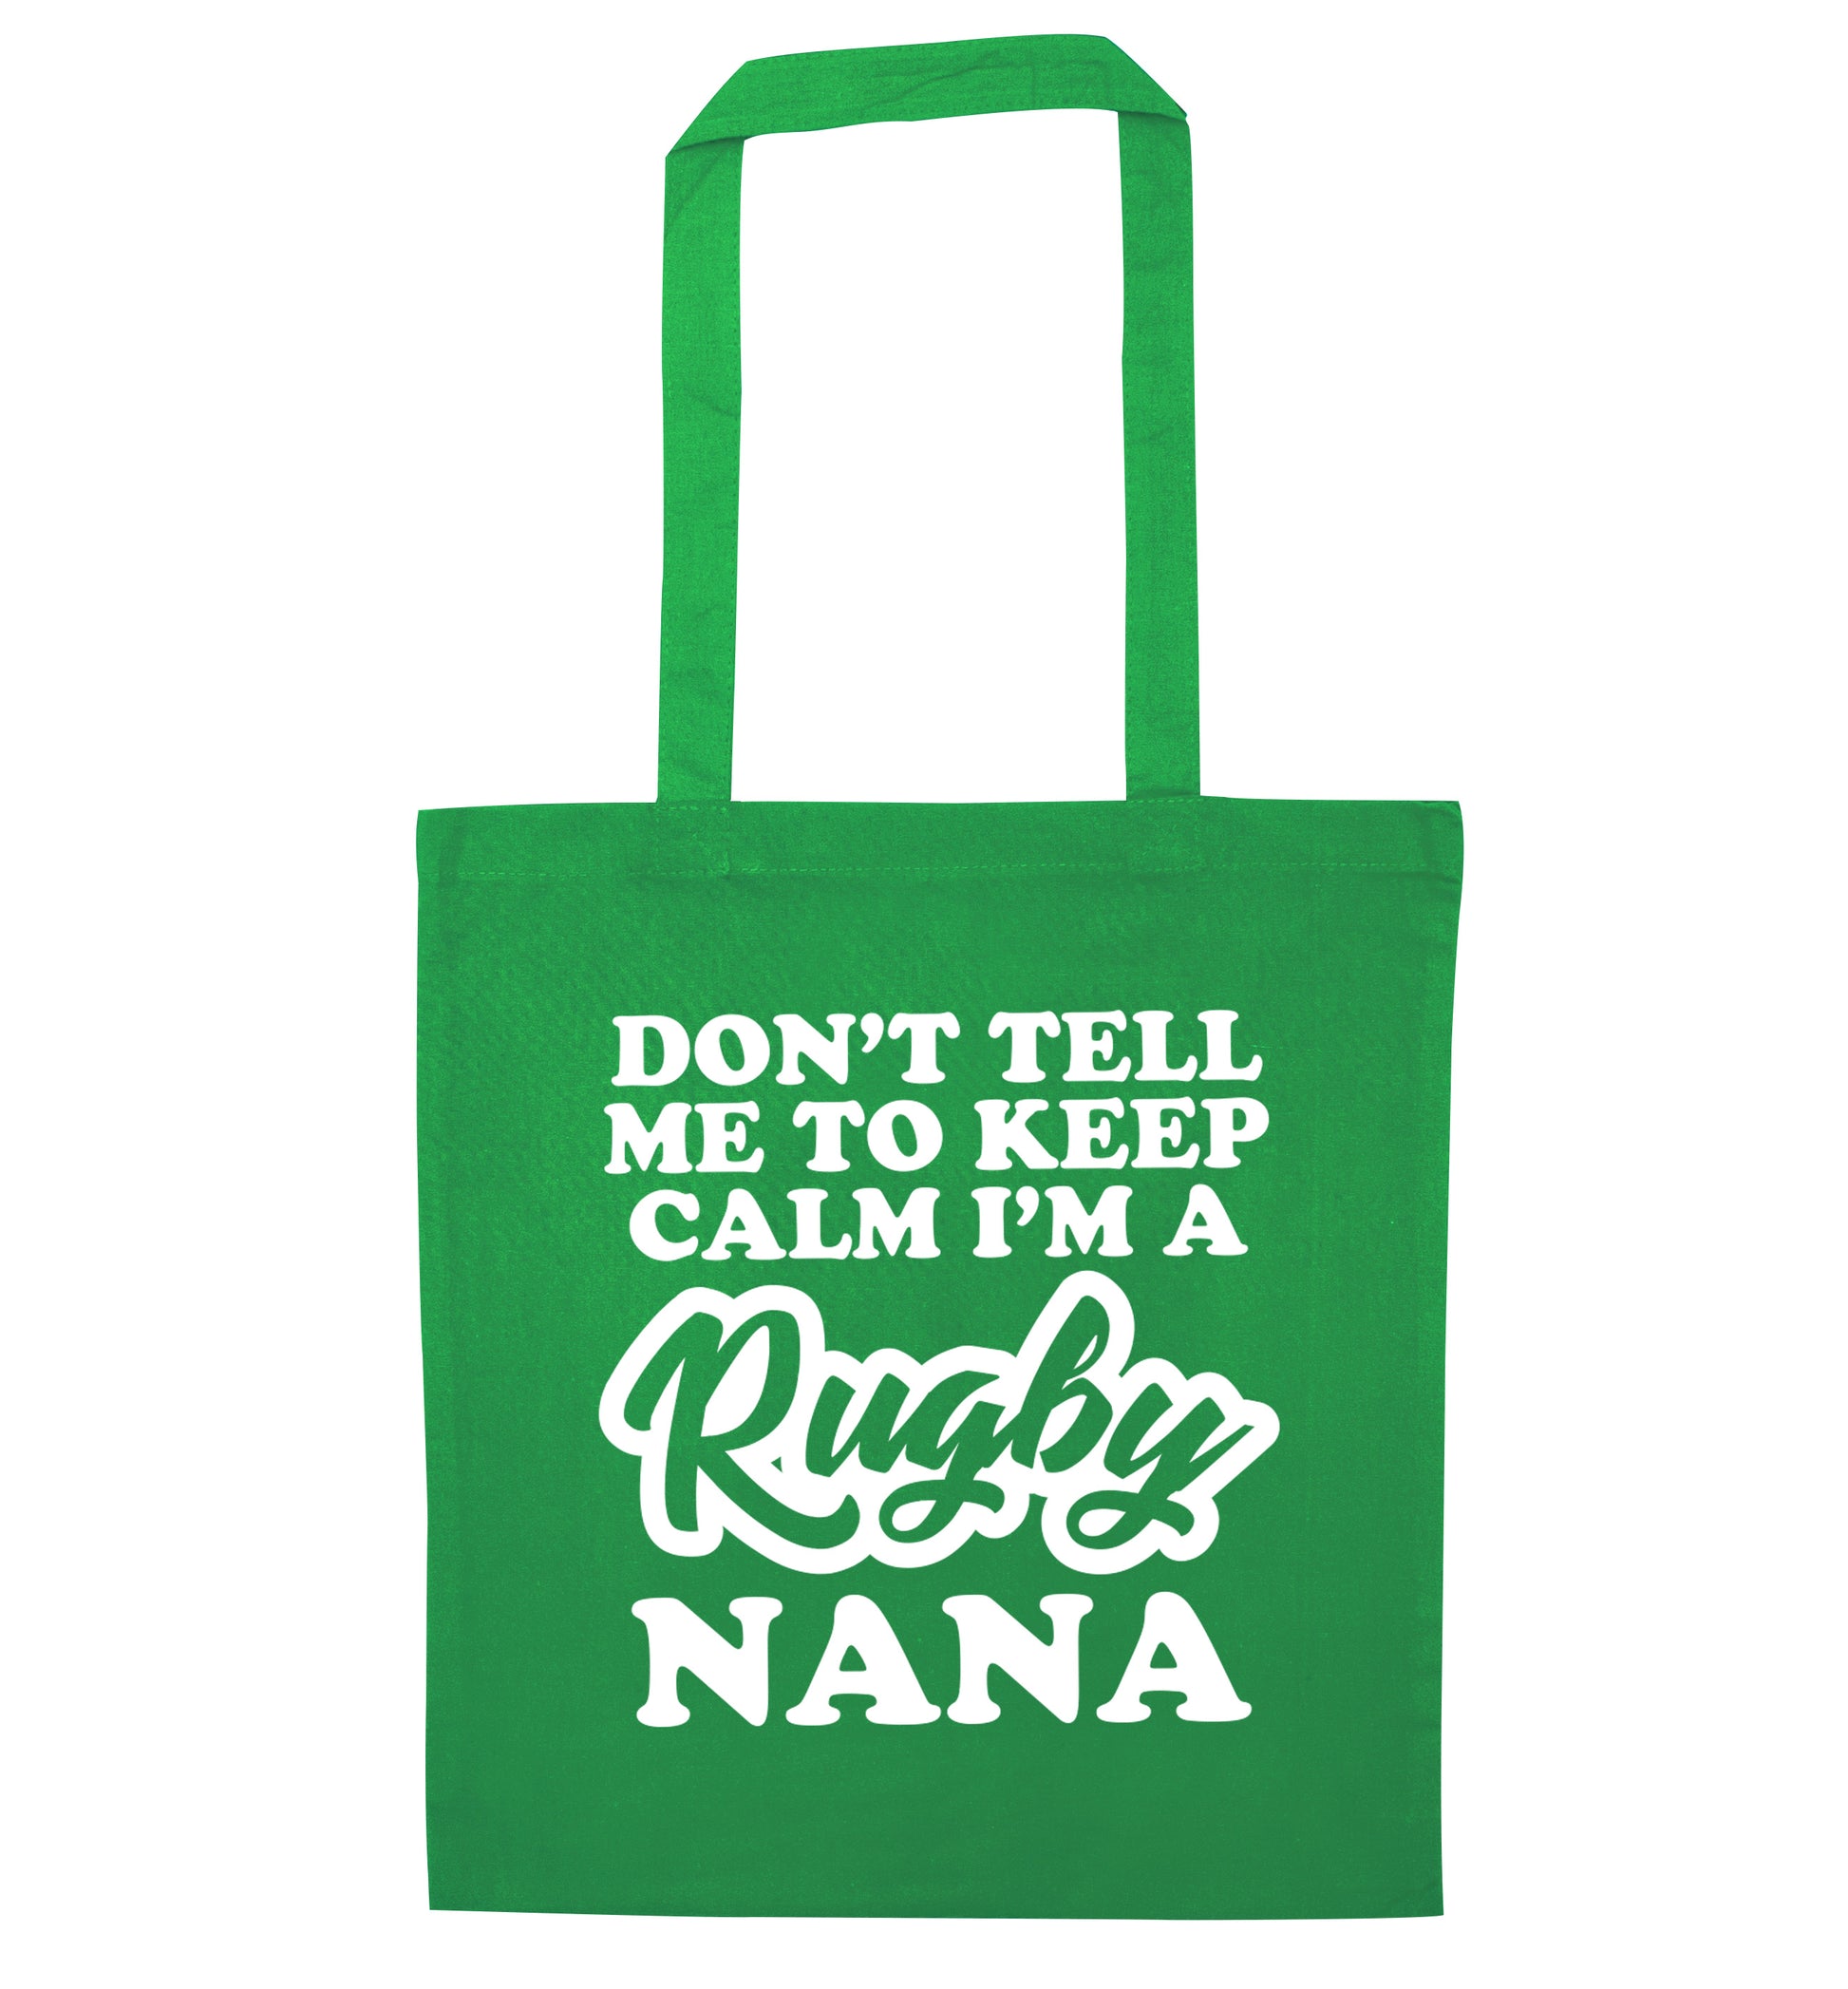 Don't tell me to keep calm I'm a rugby nana green tote bag